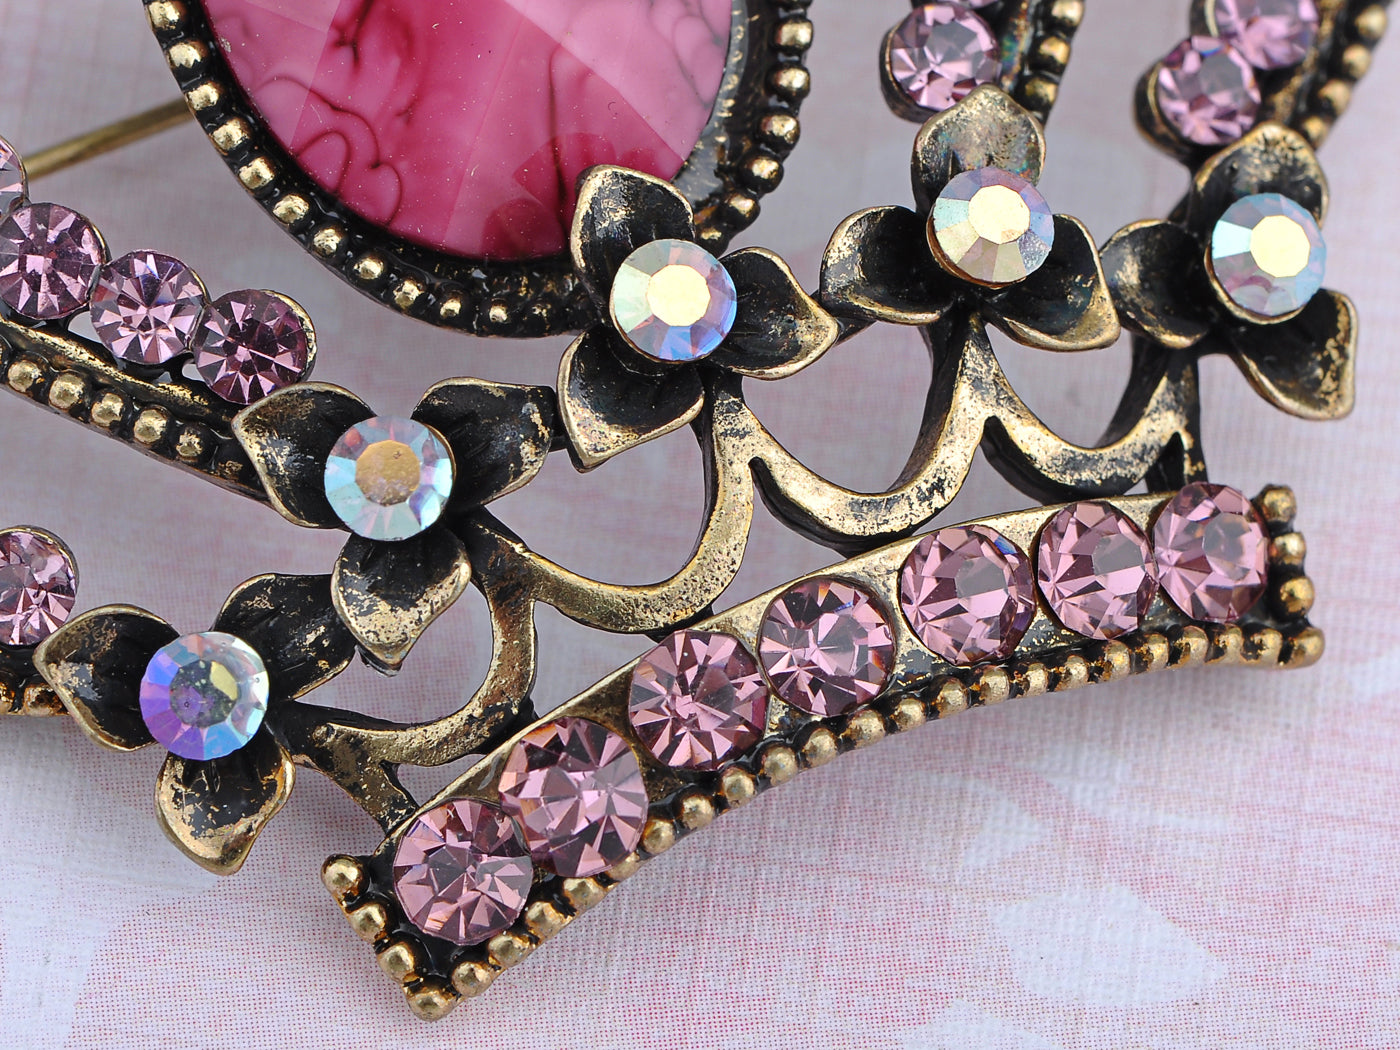 Antique Pink Vintage Princess Queen Crown Brooch Pin